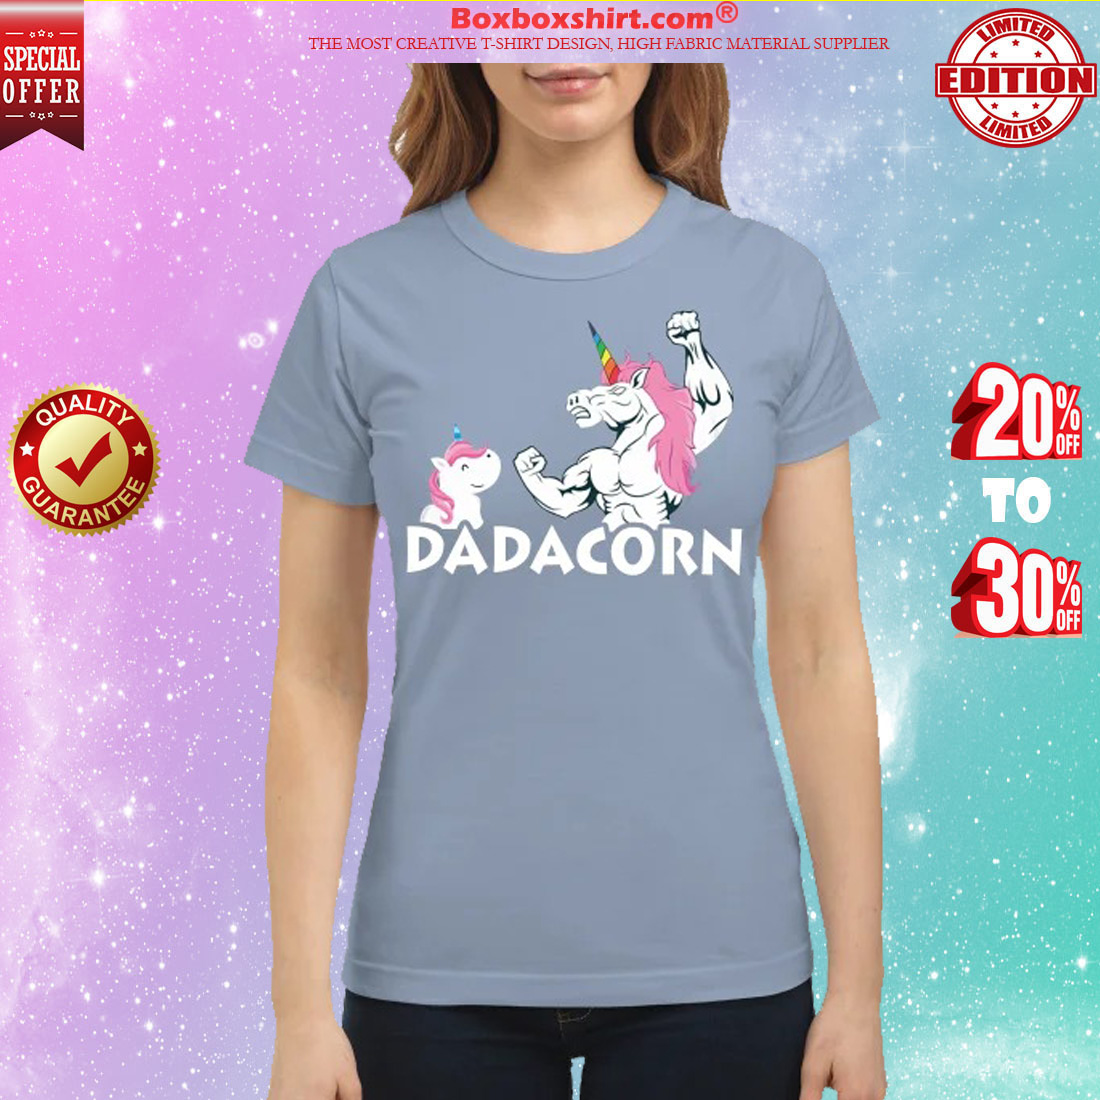 Unicorn dadacorn shirt